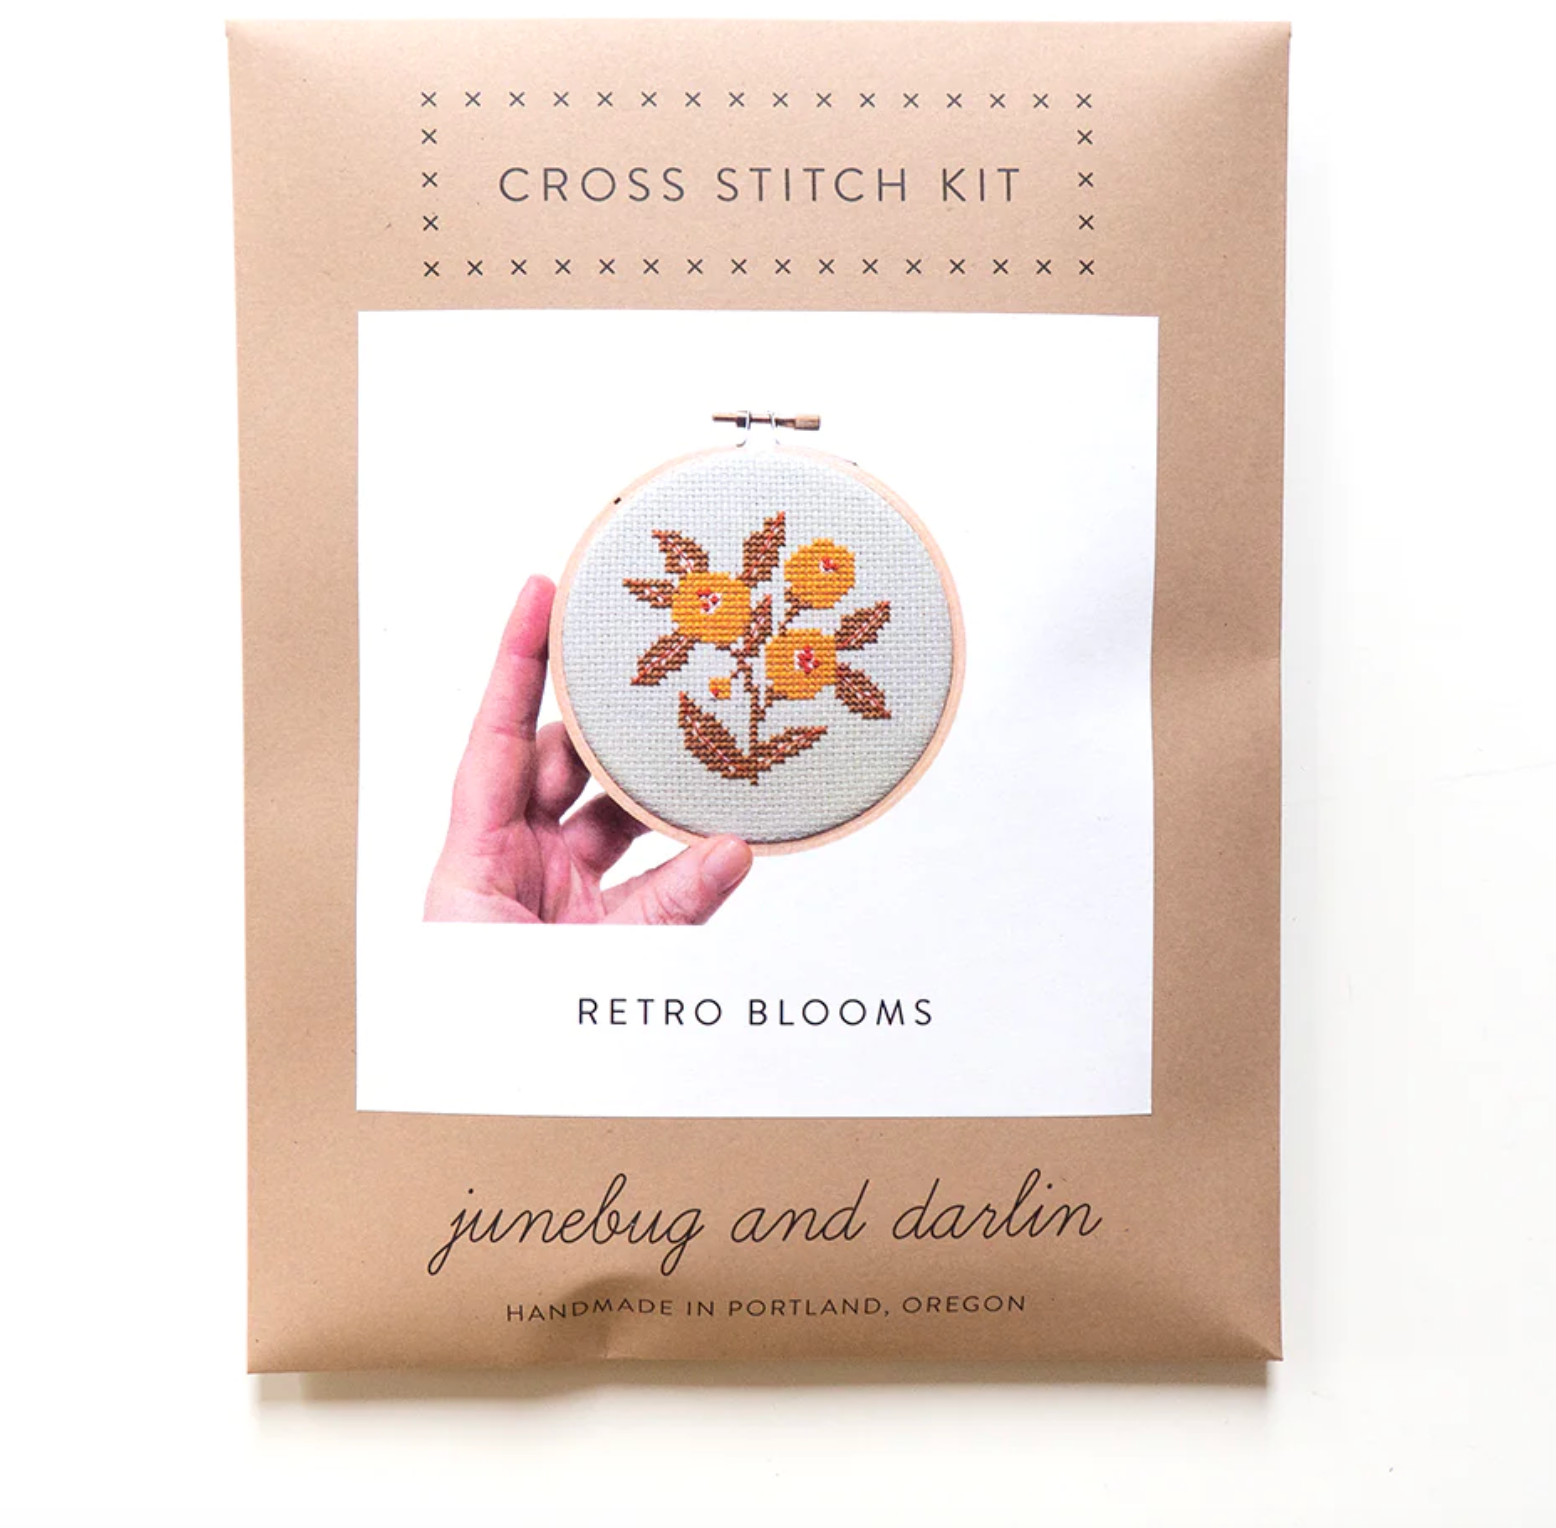 Cross Stitch Kit: Retro Blooms